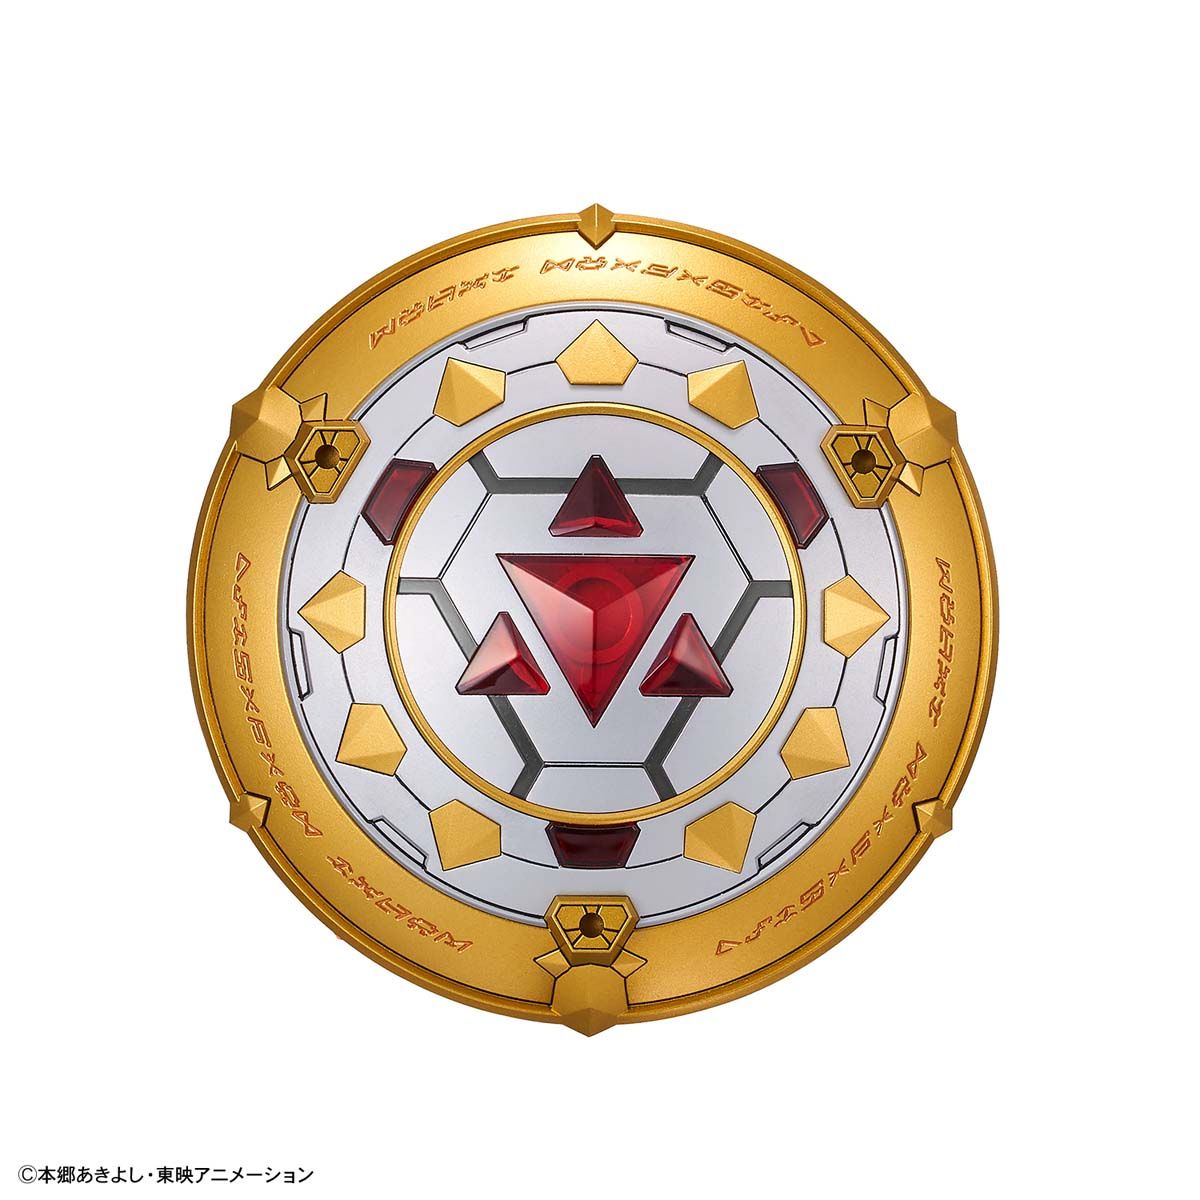 Figure-rise Standard - Digimon - [Amplified] Dukemon (Gallantmon)